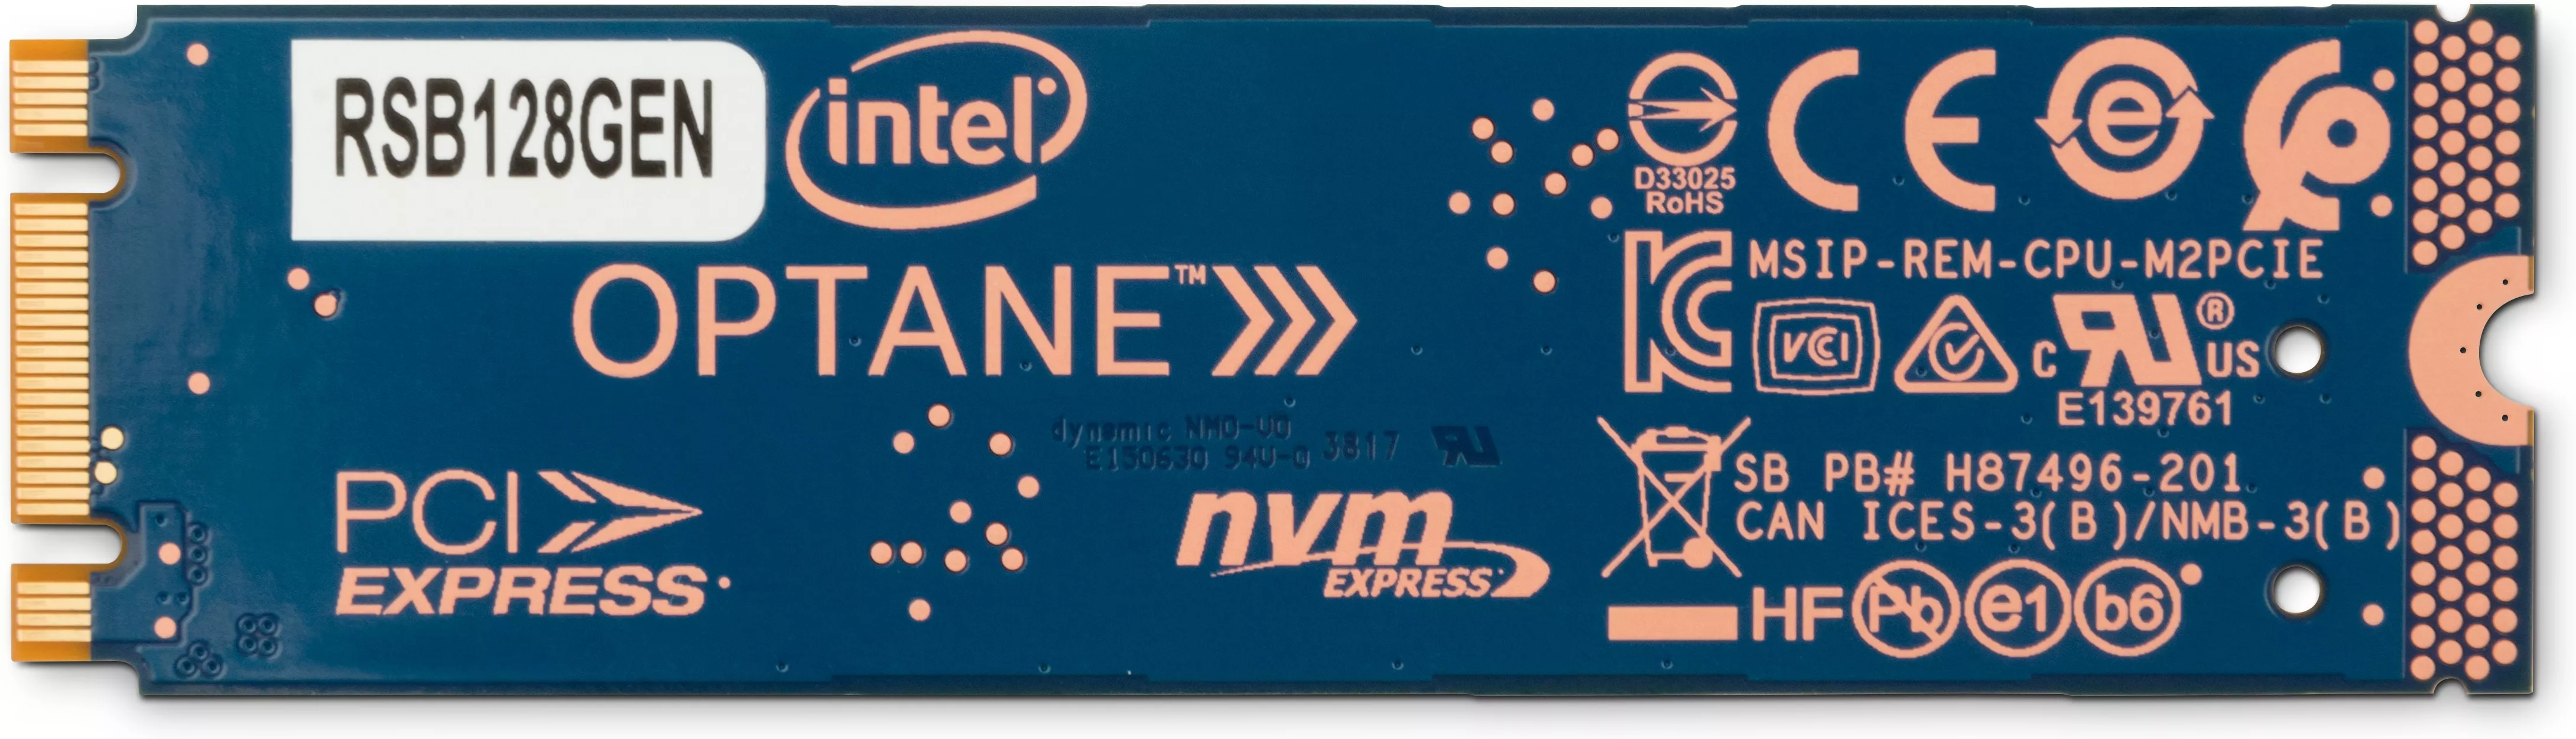 Achat HP Intel Optane 256GB DDR4 2666 NVDIMM Memory au meilleur prix